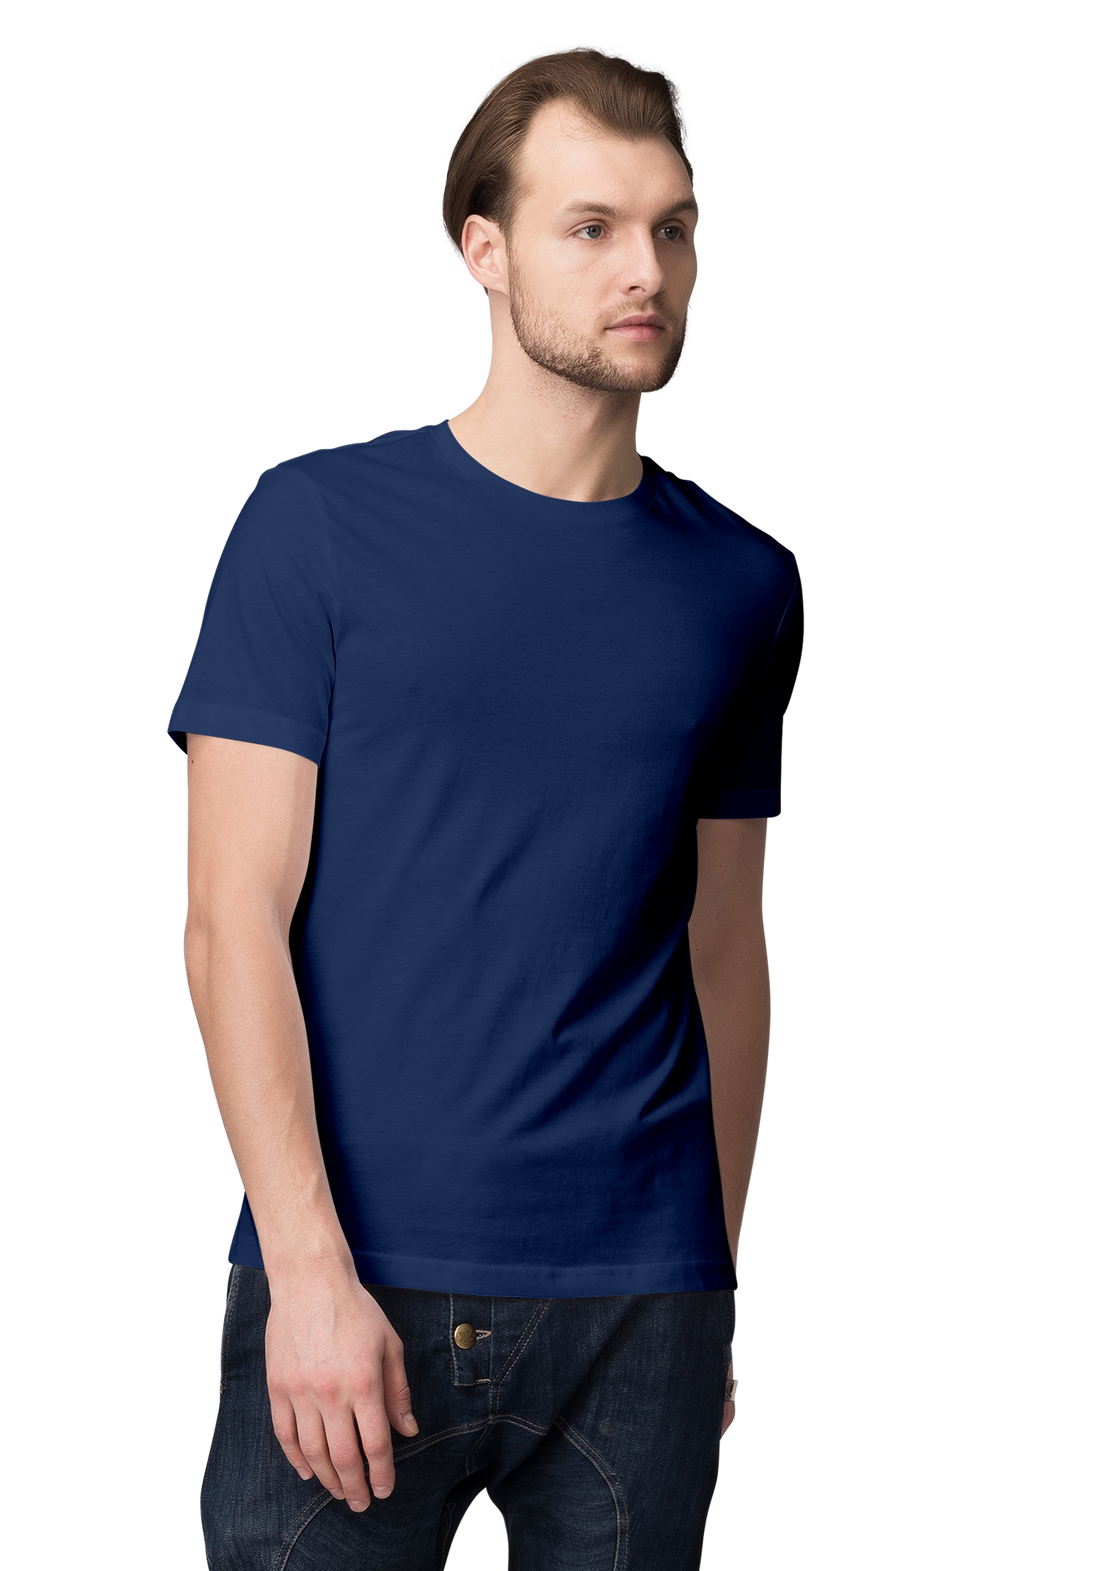 Unisex Basic Plain Navy Blue T-shirt